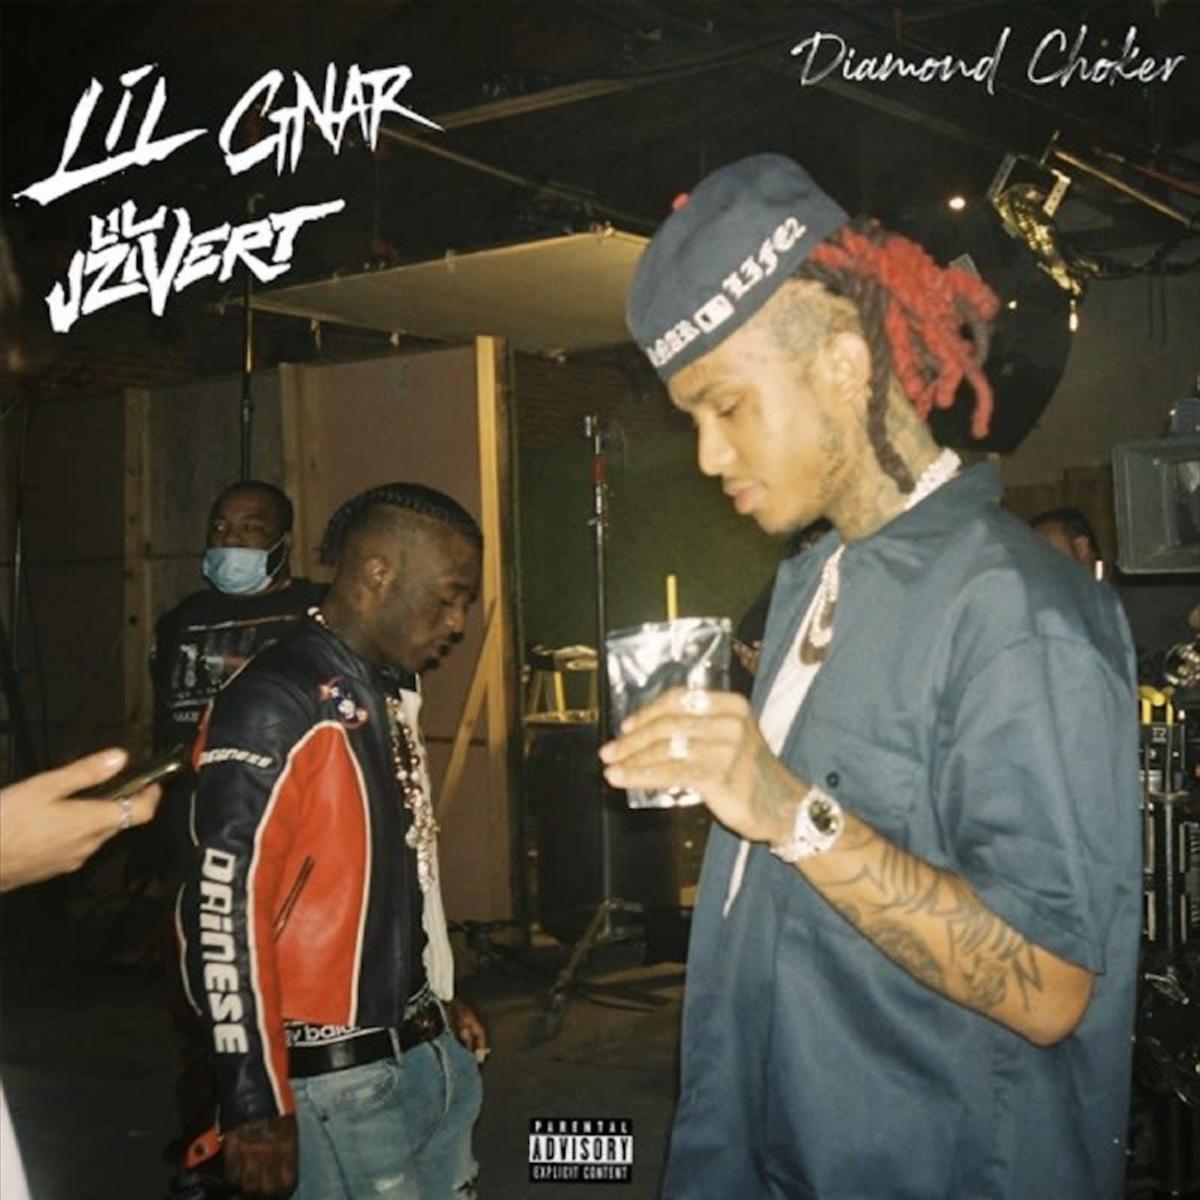 Lil Gnar & Lil Uzi Vert Sound Like One On “Diamond Choker”